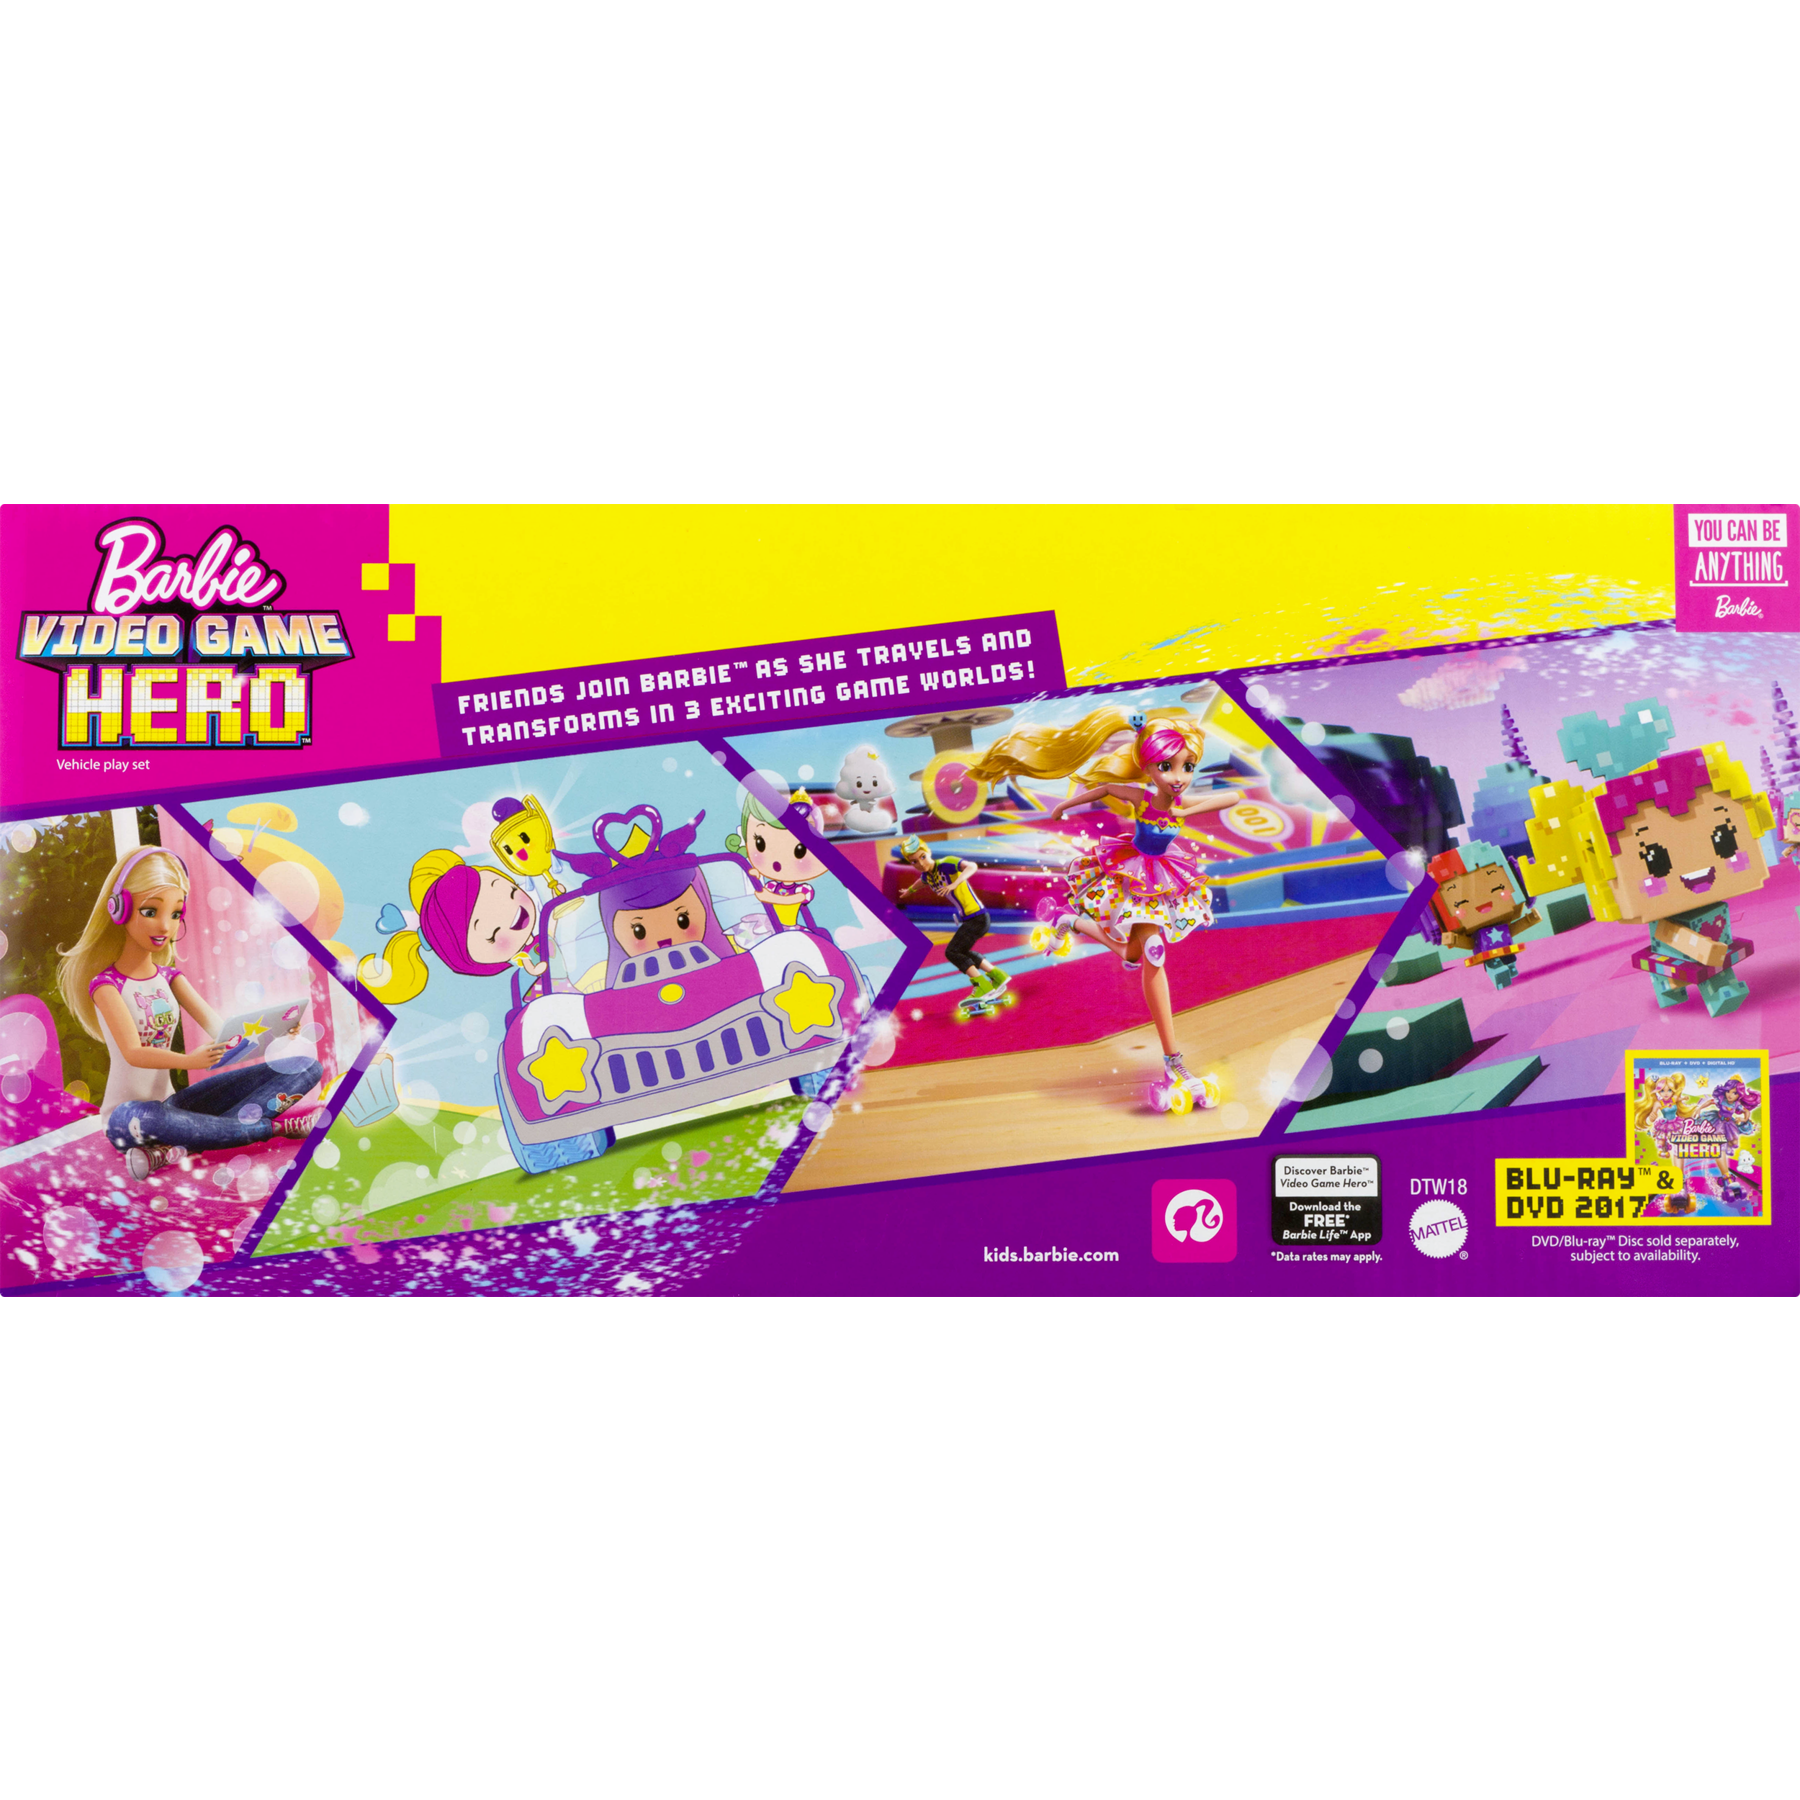 Barbie Li Porn Videos Download - Barbie Video Game Hero Vehicle & Figure Play Set - Walmart.com